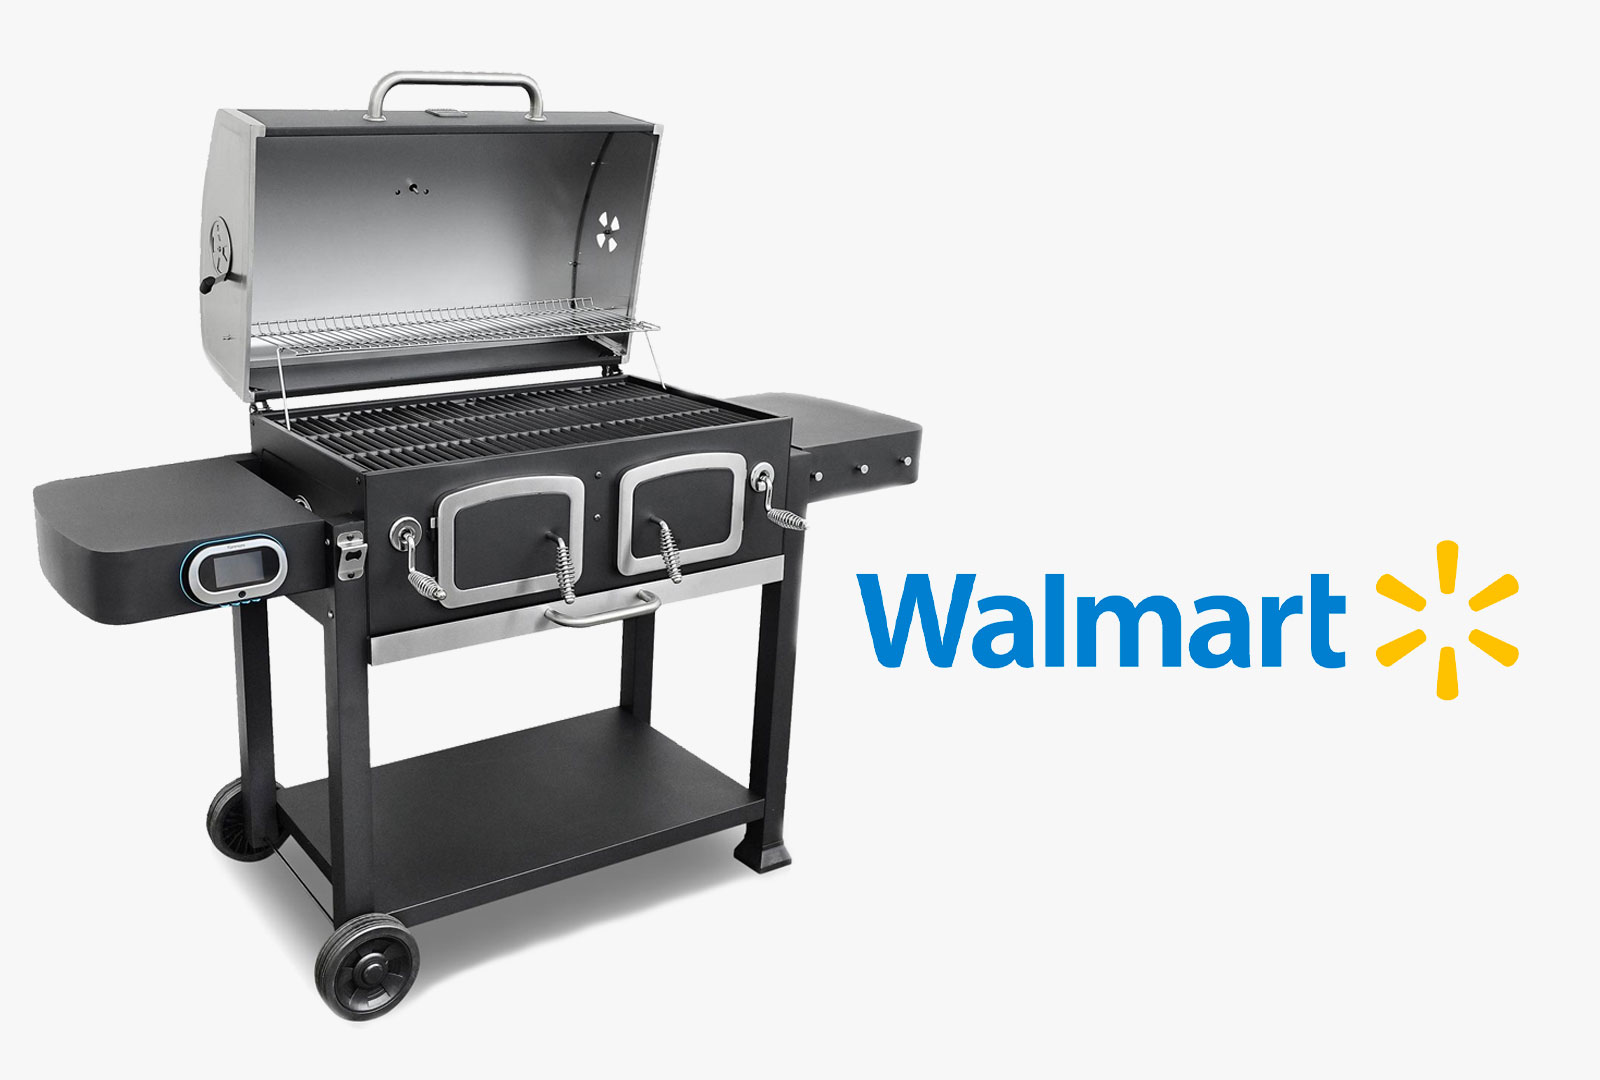 2022 - Launched Walmart-Exclusive Kenmore Smart Charcoal Grills on Walmart.com